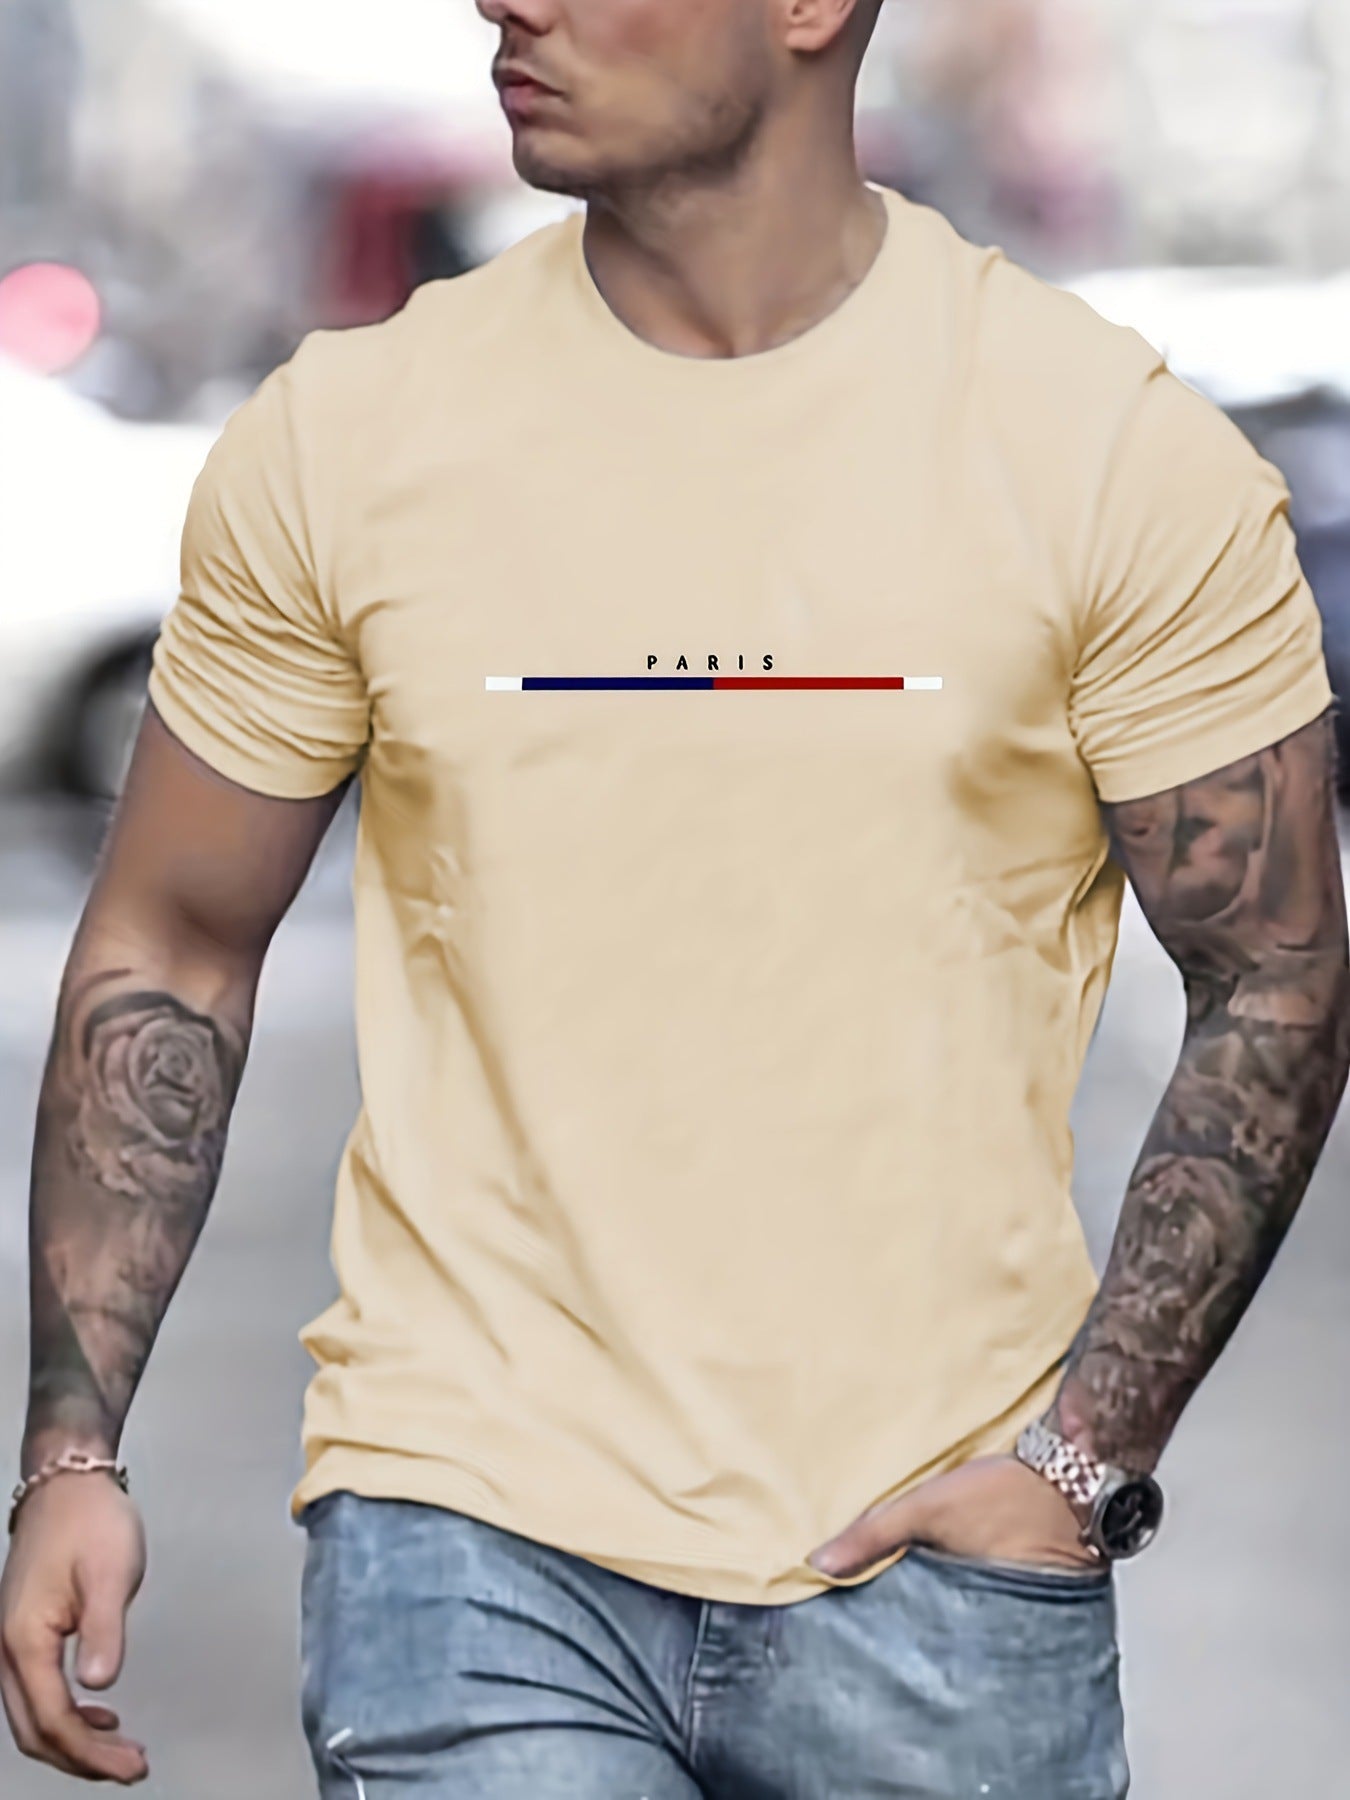 Men's Fashion Personality Cotton T-shirt - CLOTHFN